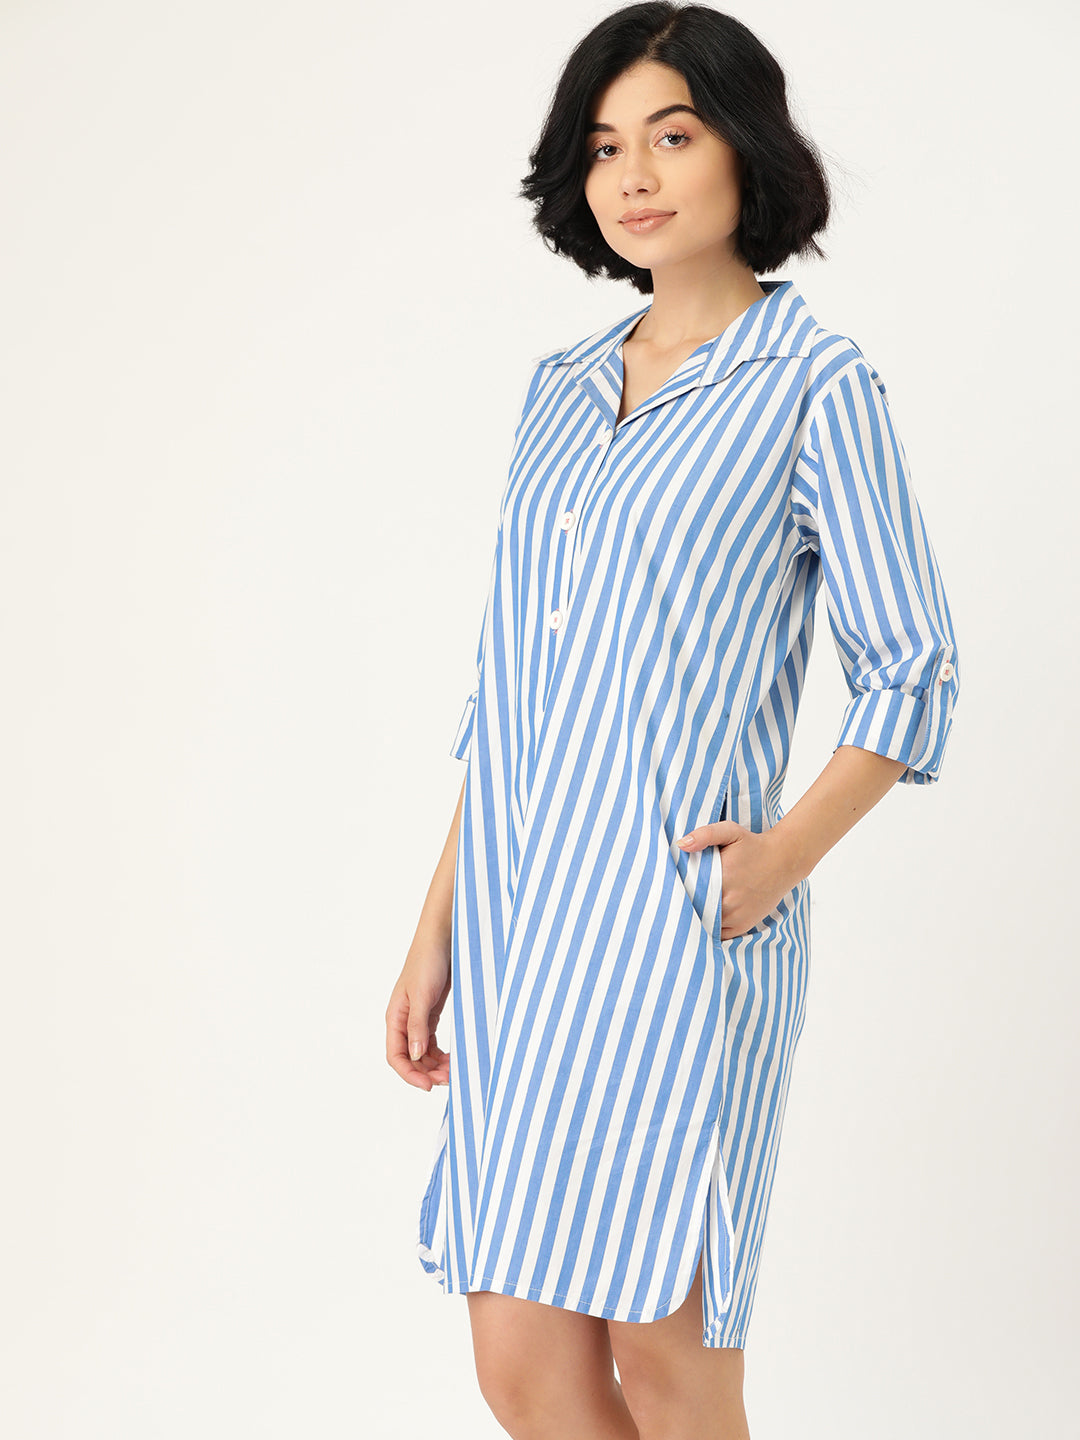 C1106 Blue Striped Sleep Shirt - Clt.s